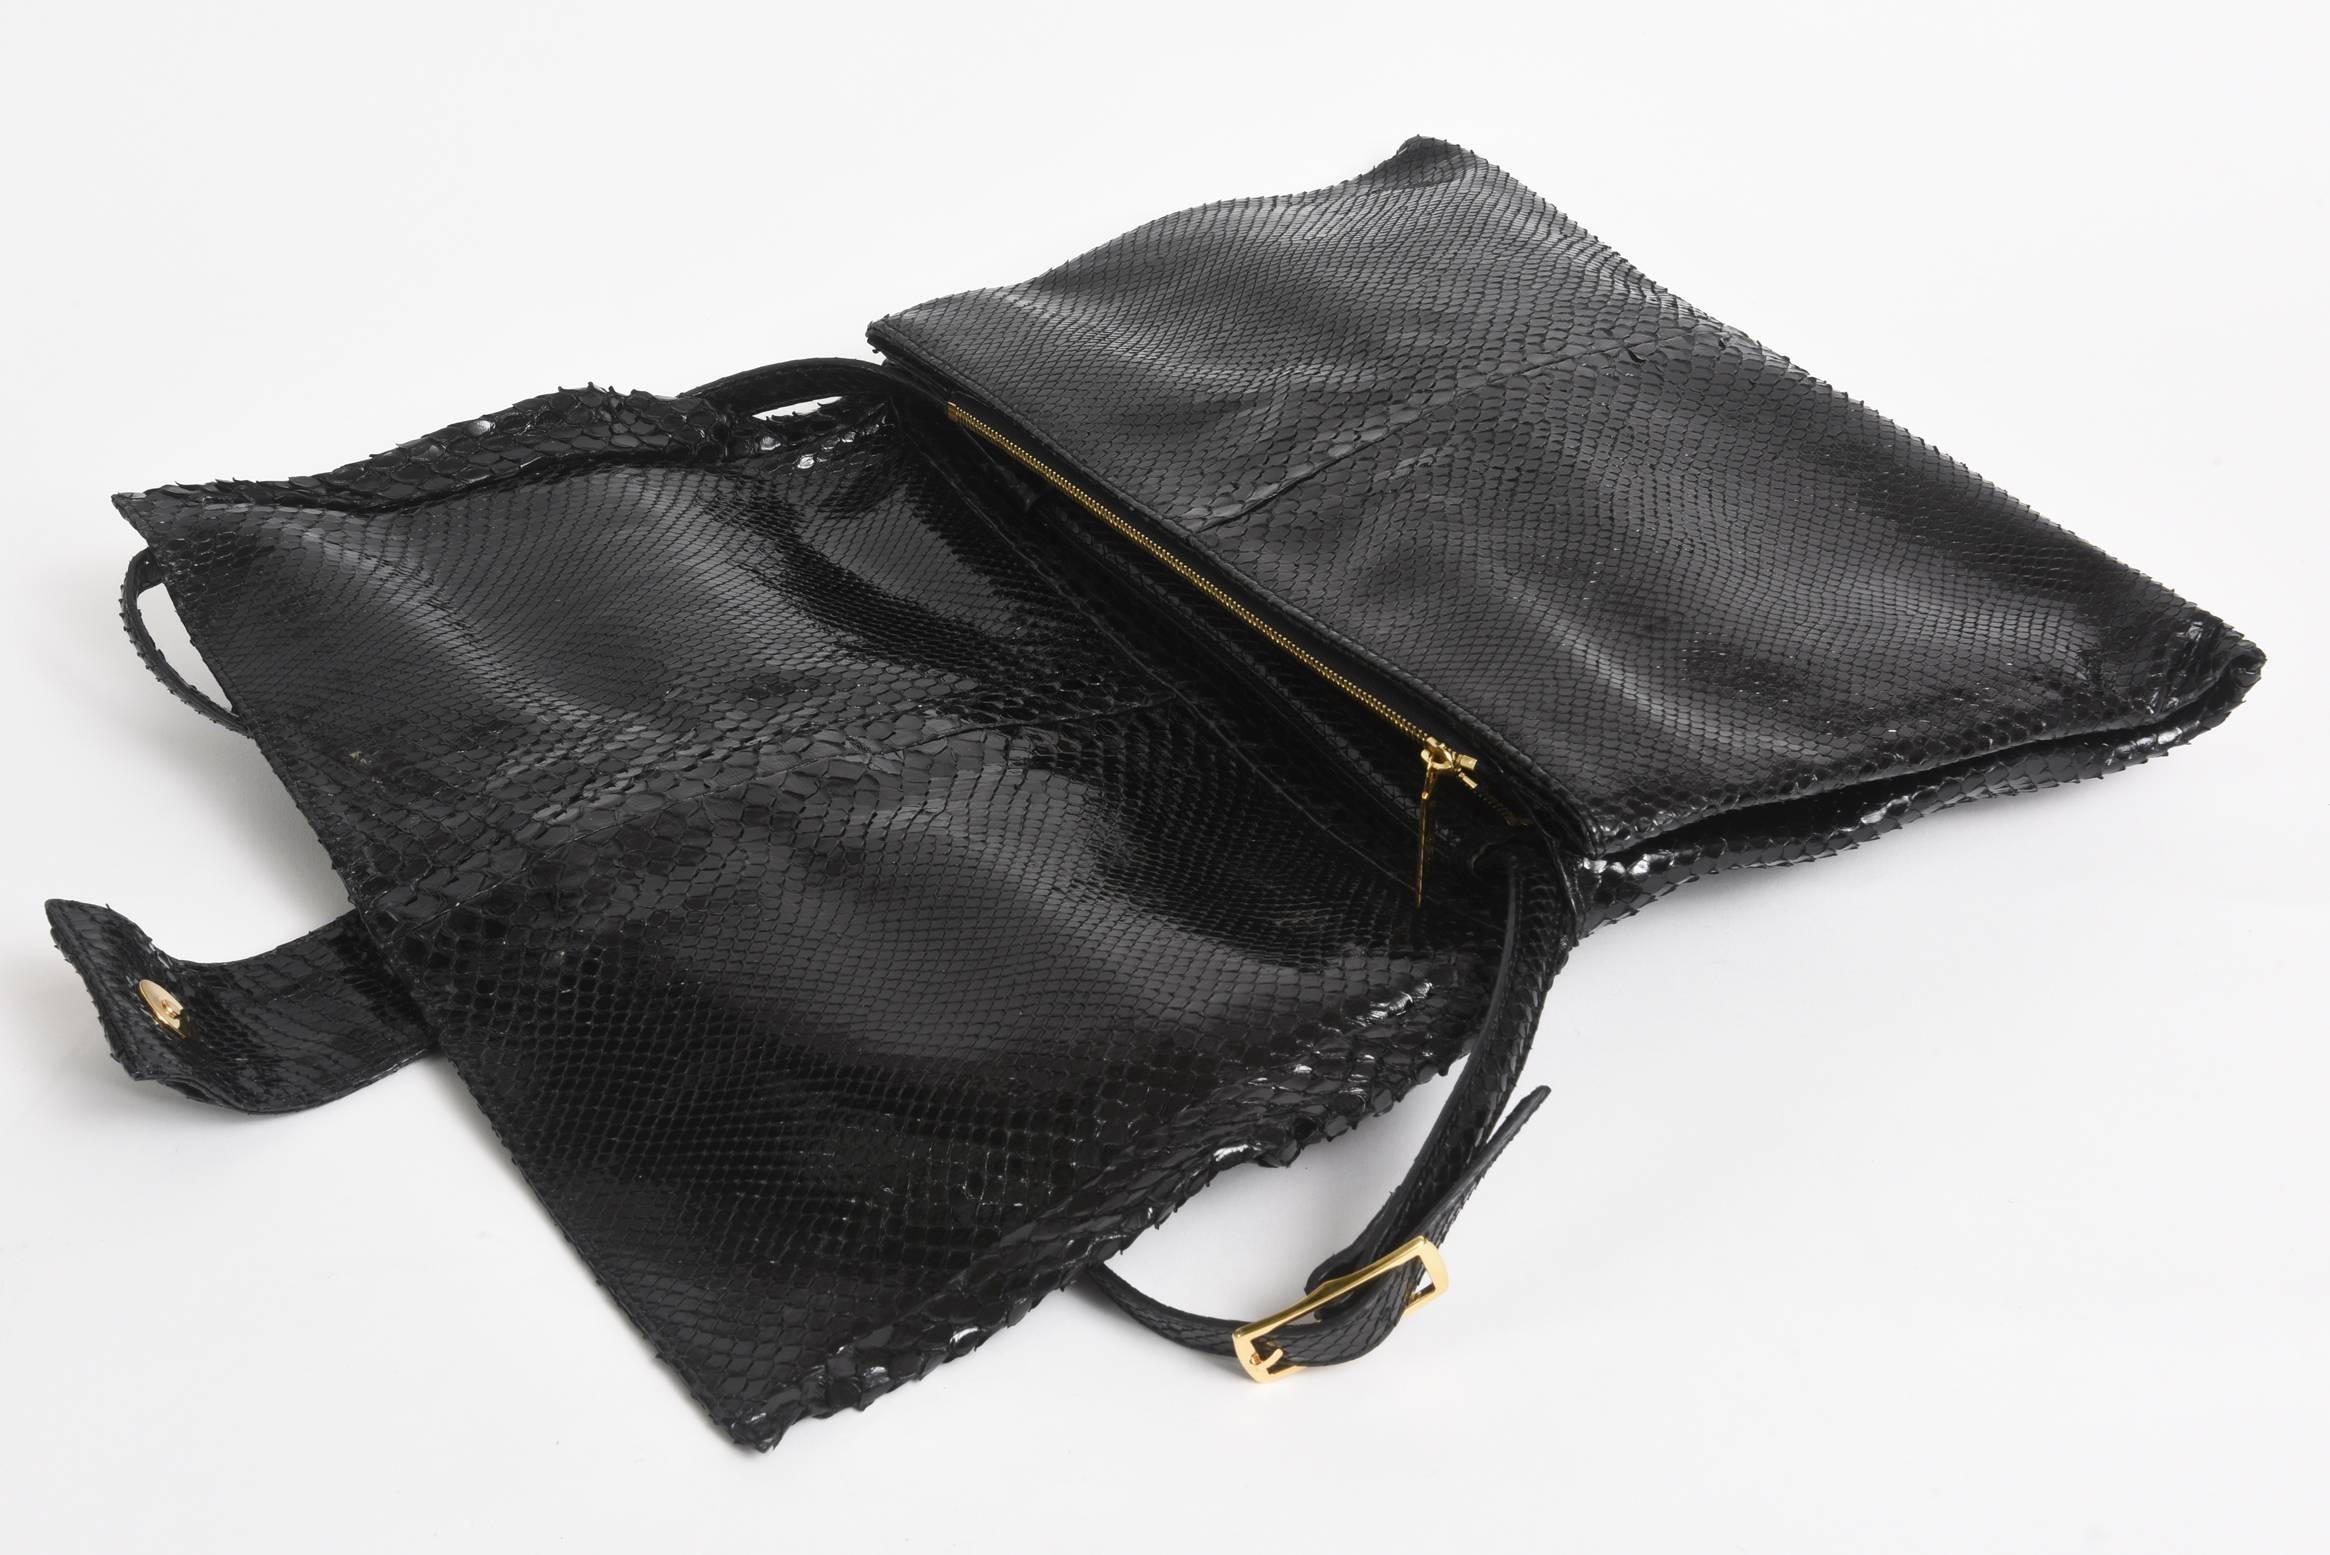  Valentino Black Python Bag Or Clutch For Sale 1